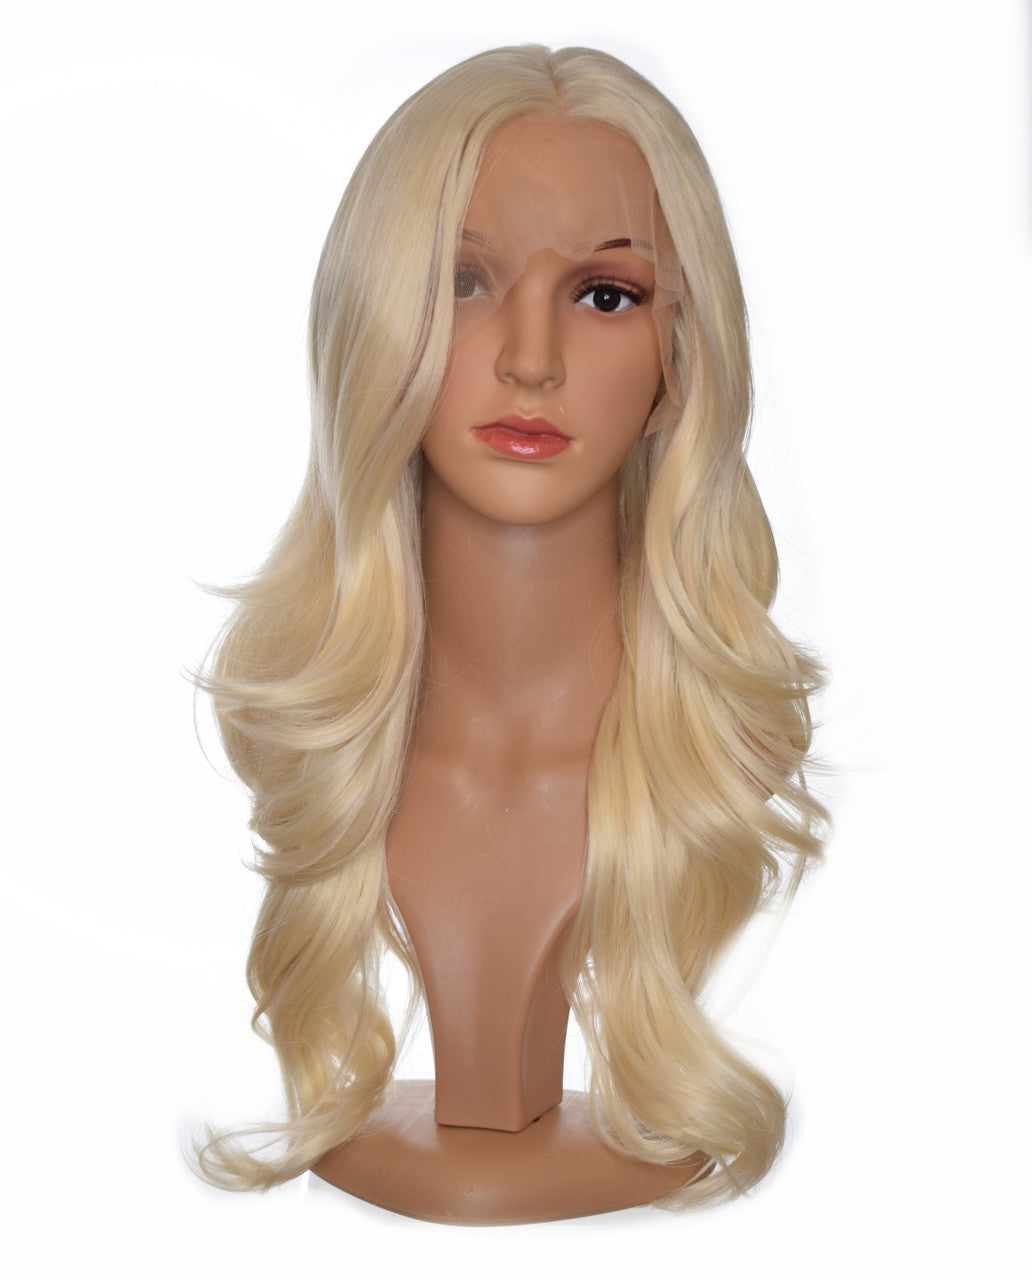 Blonde Lace Front Face Framing 70's Inspired Wig. Platinum Blonde